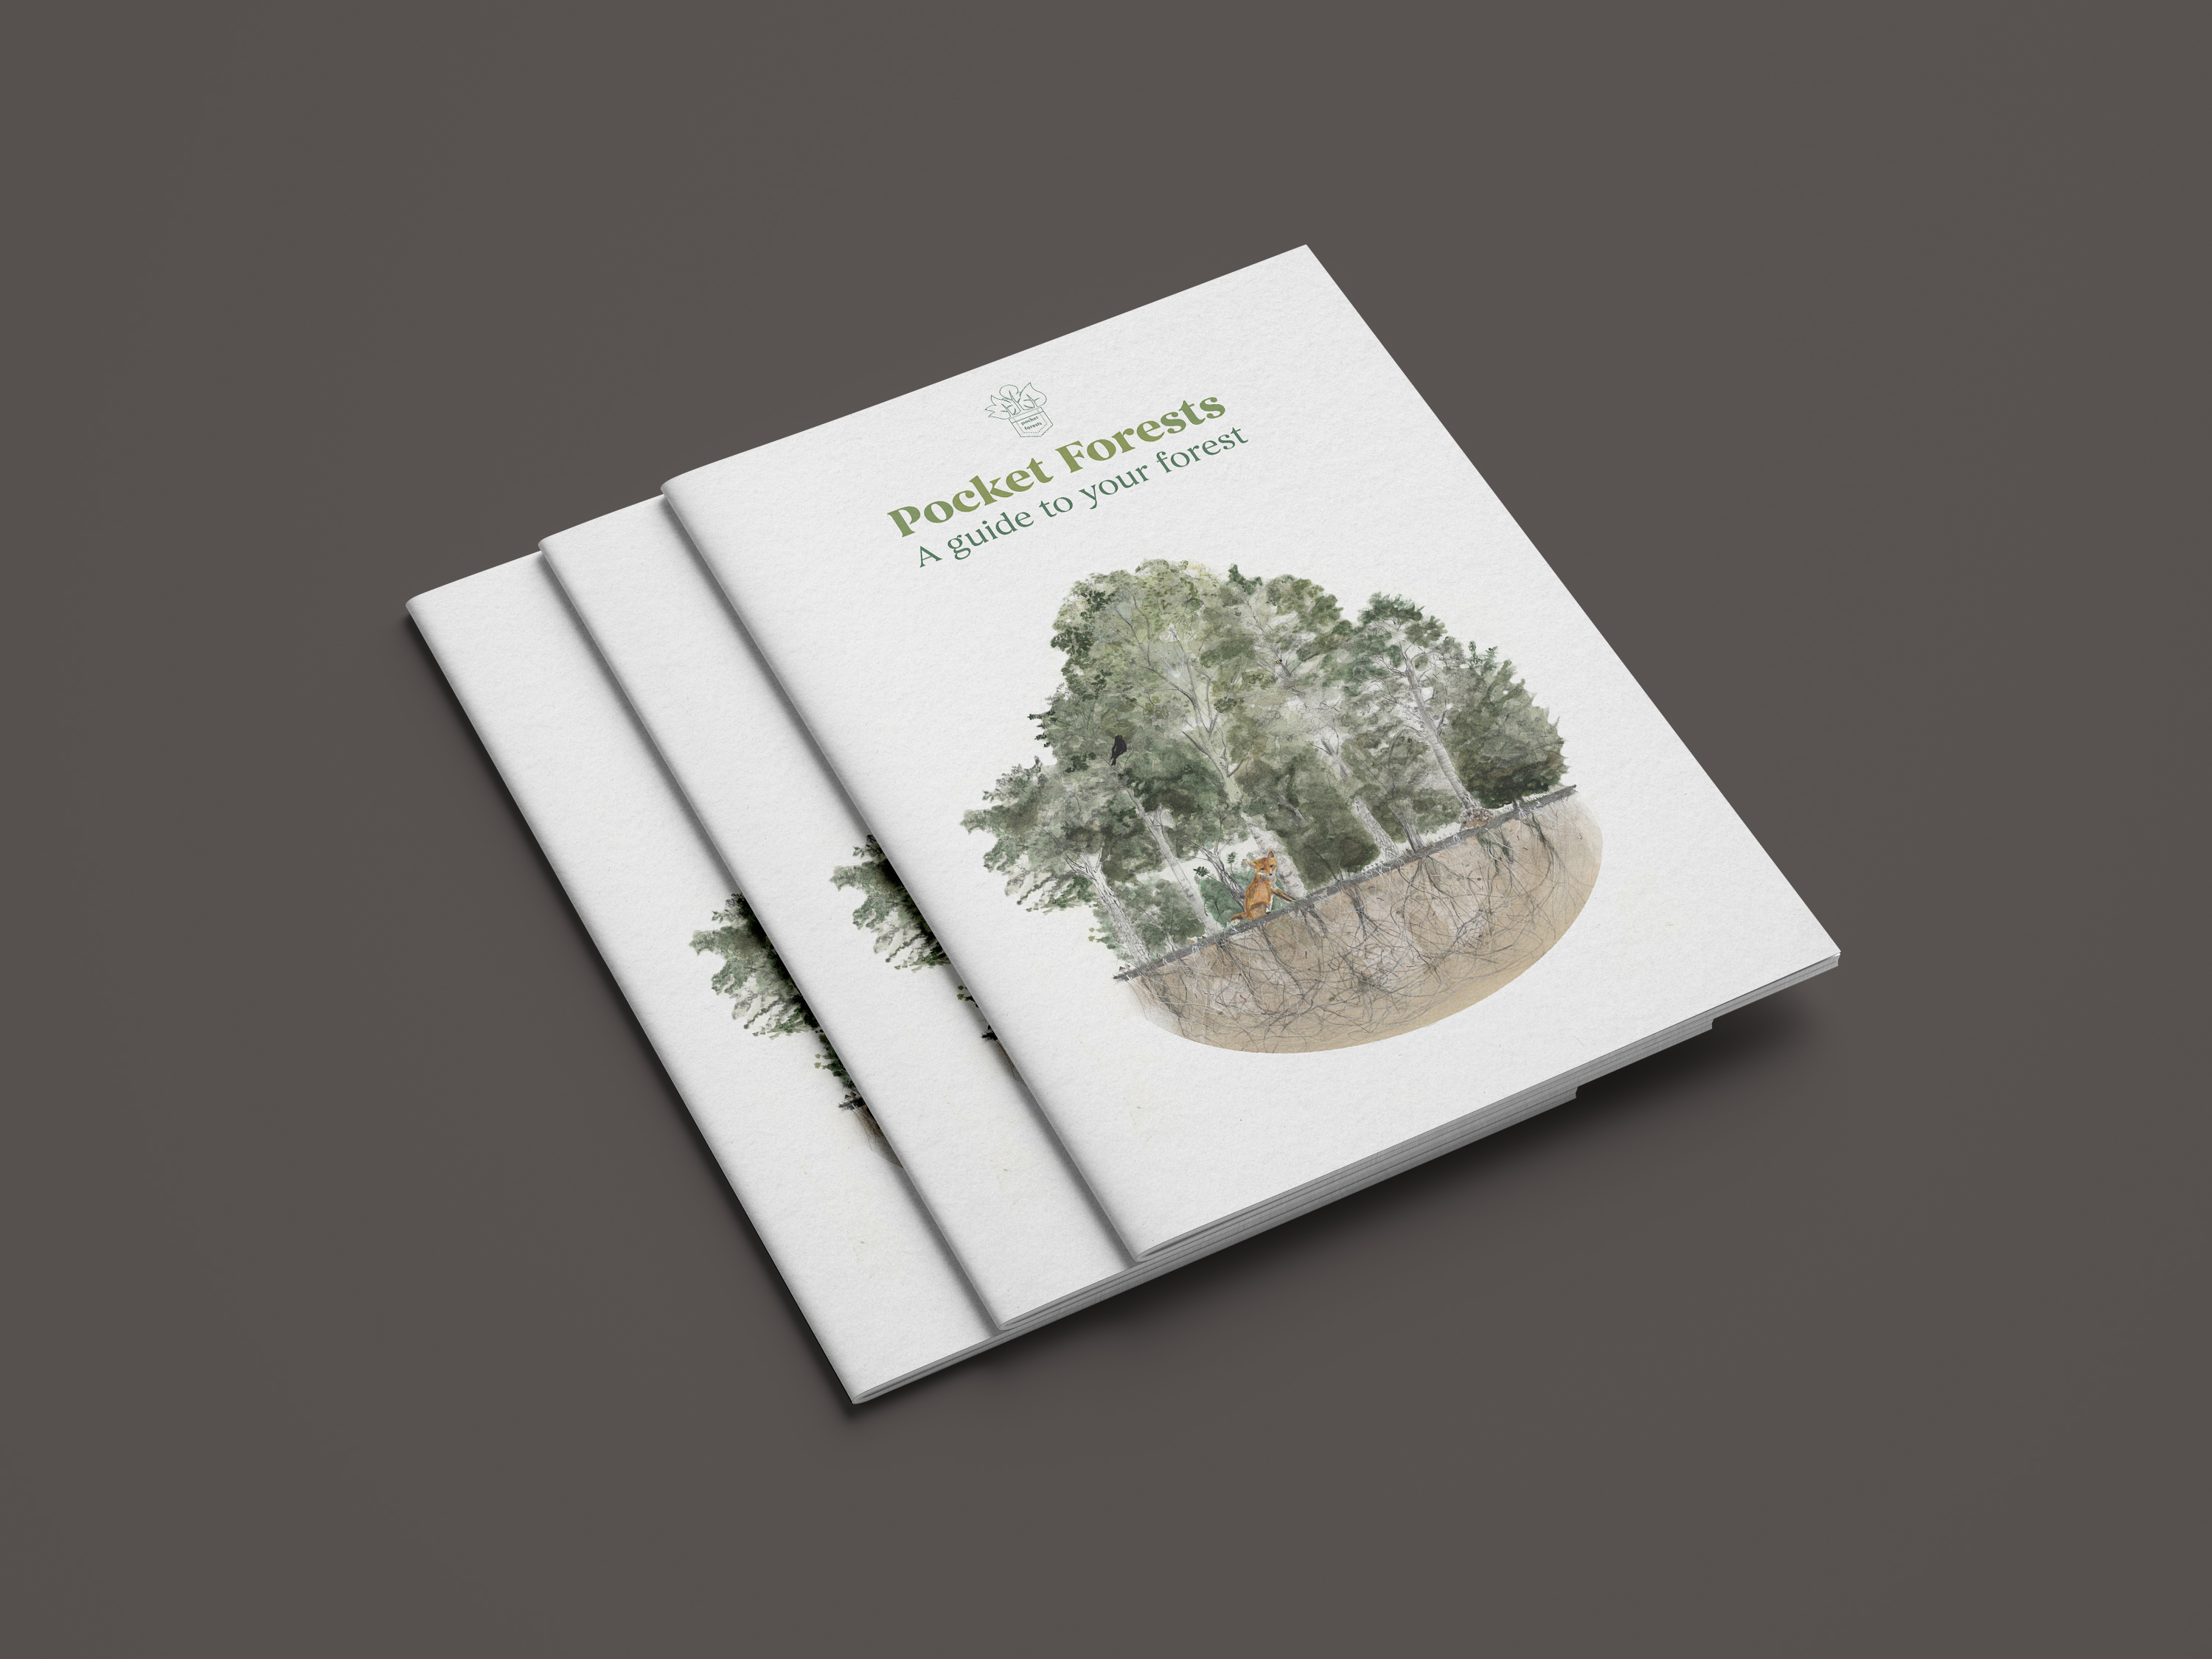 Cover image: Pocket Forests